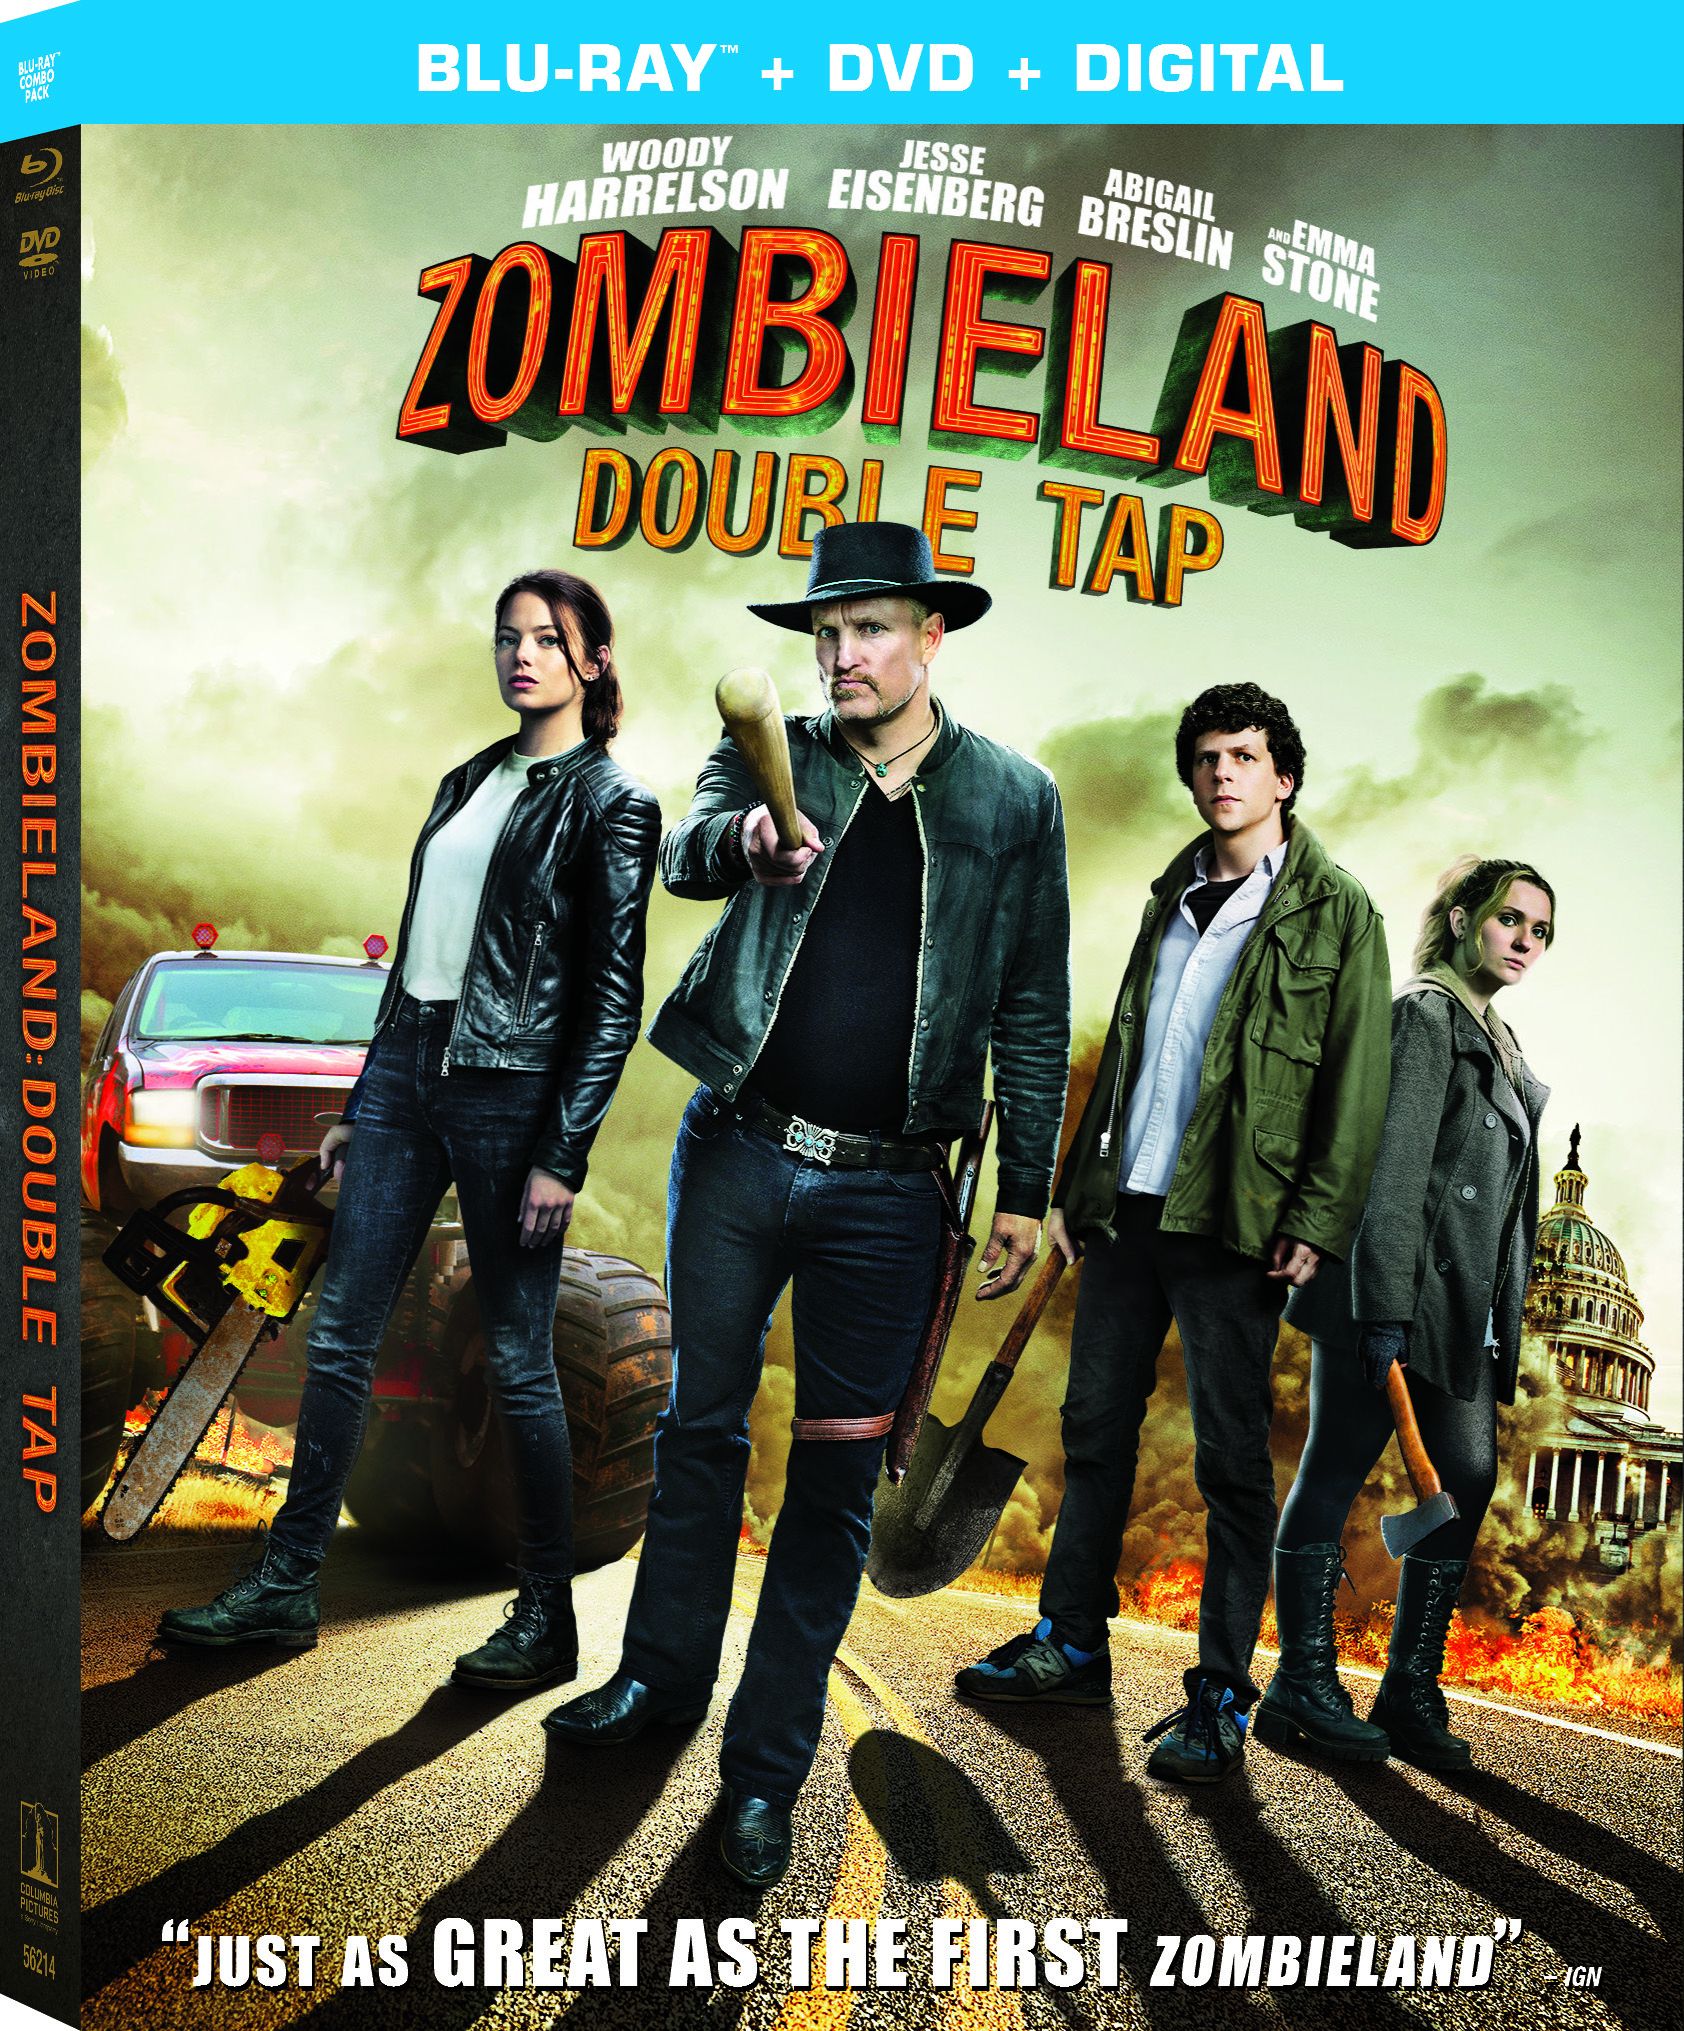 Zombieland: Double Tap Blu-ray